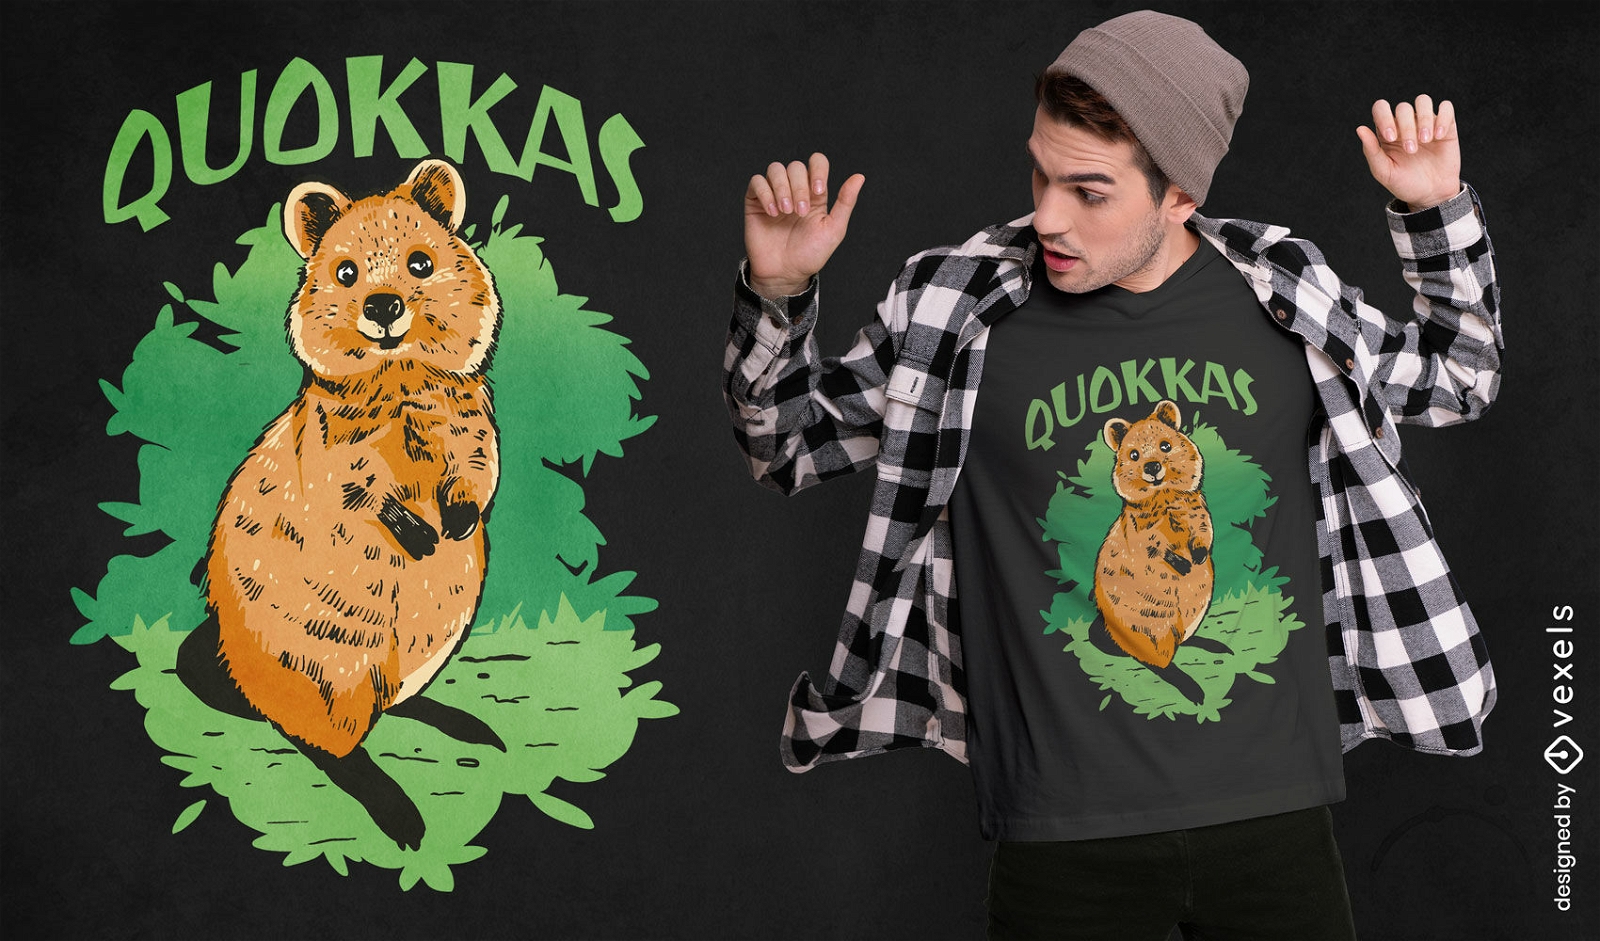 Quokka australian animal cute t-shirt design